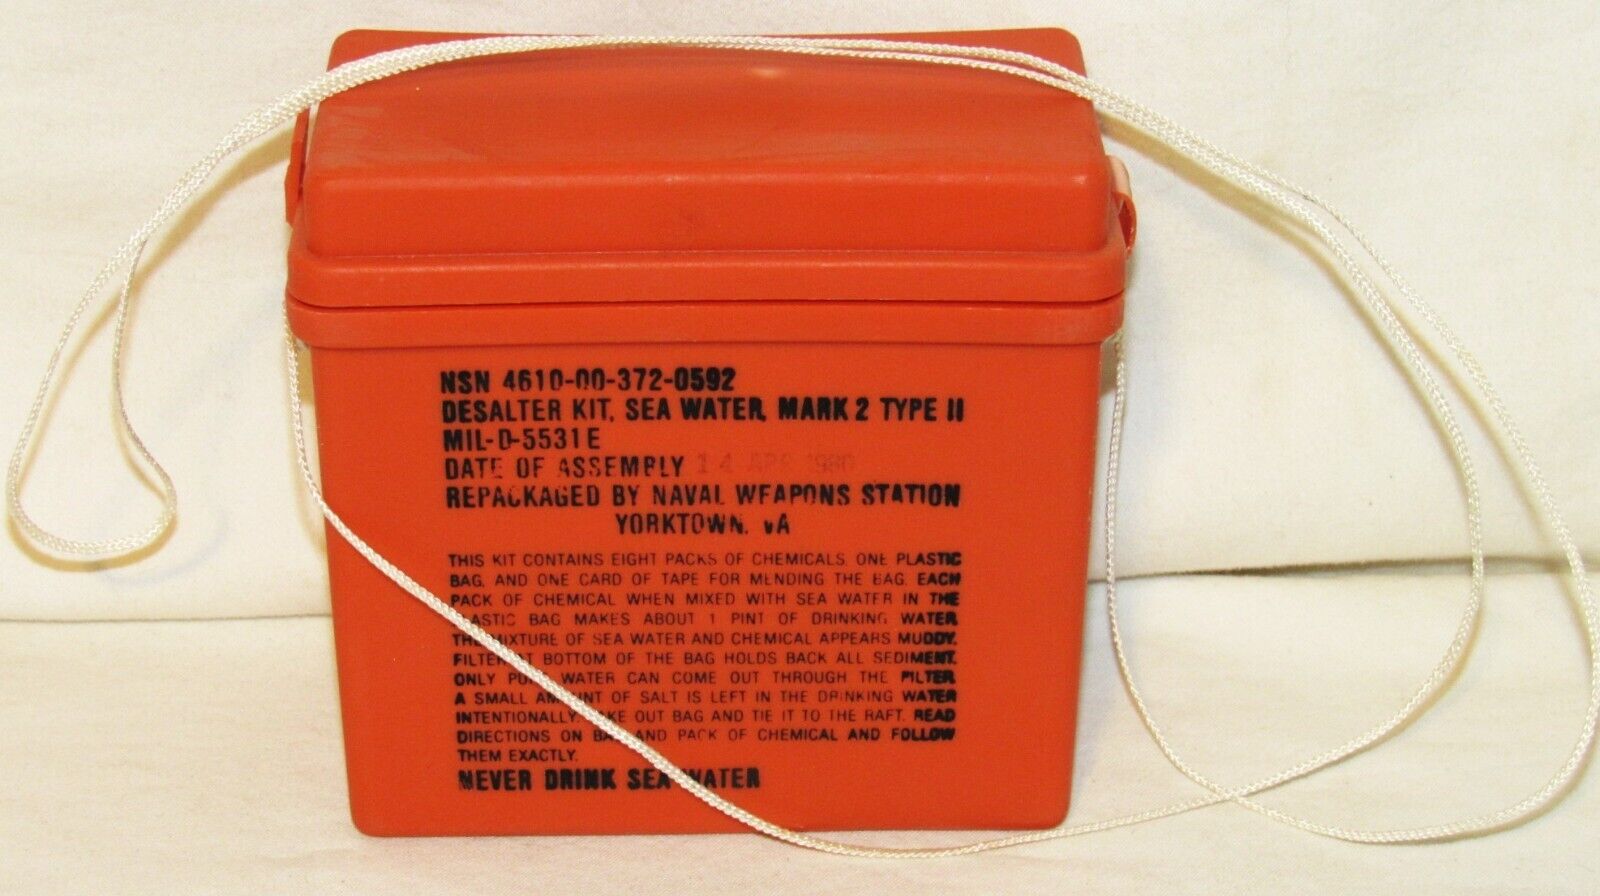 US Military Issue Desalter Kit, Seawater Mark 2 Type II - 1980